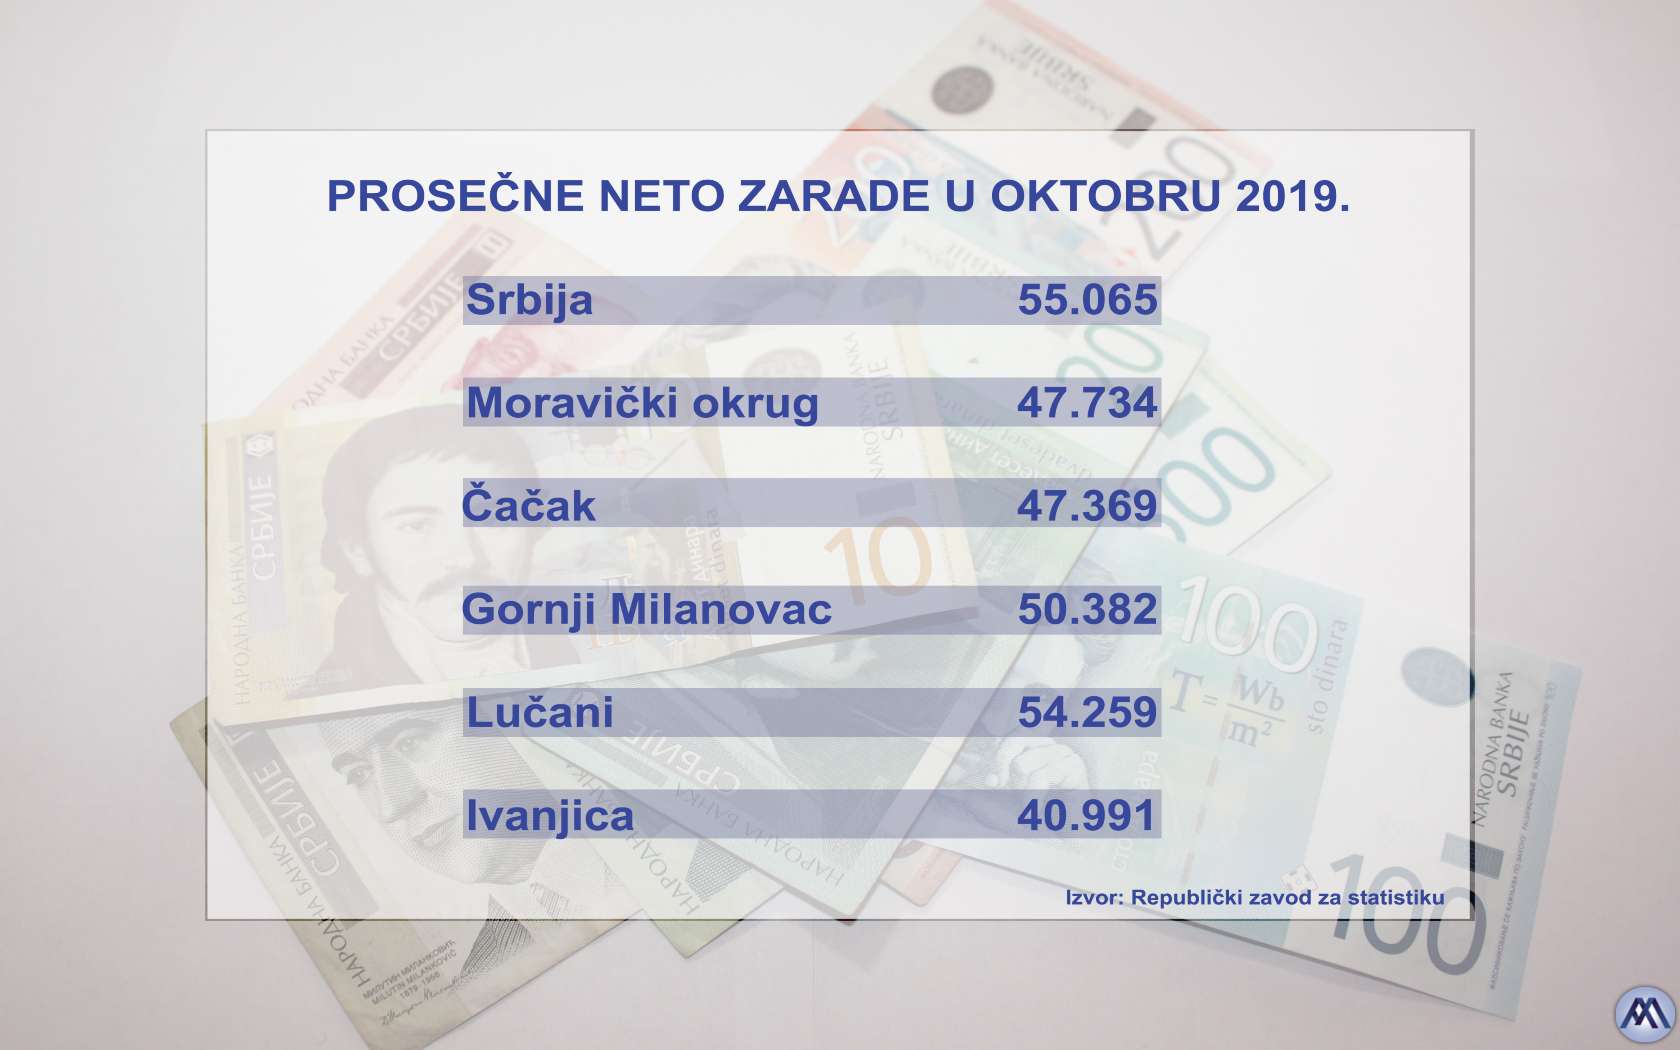 Prosečna oktobarska zarada u Moravičkom okrugu 47.734 dinara